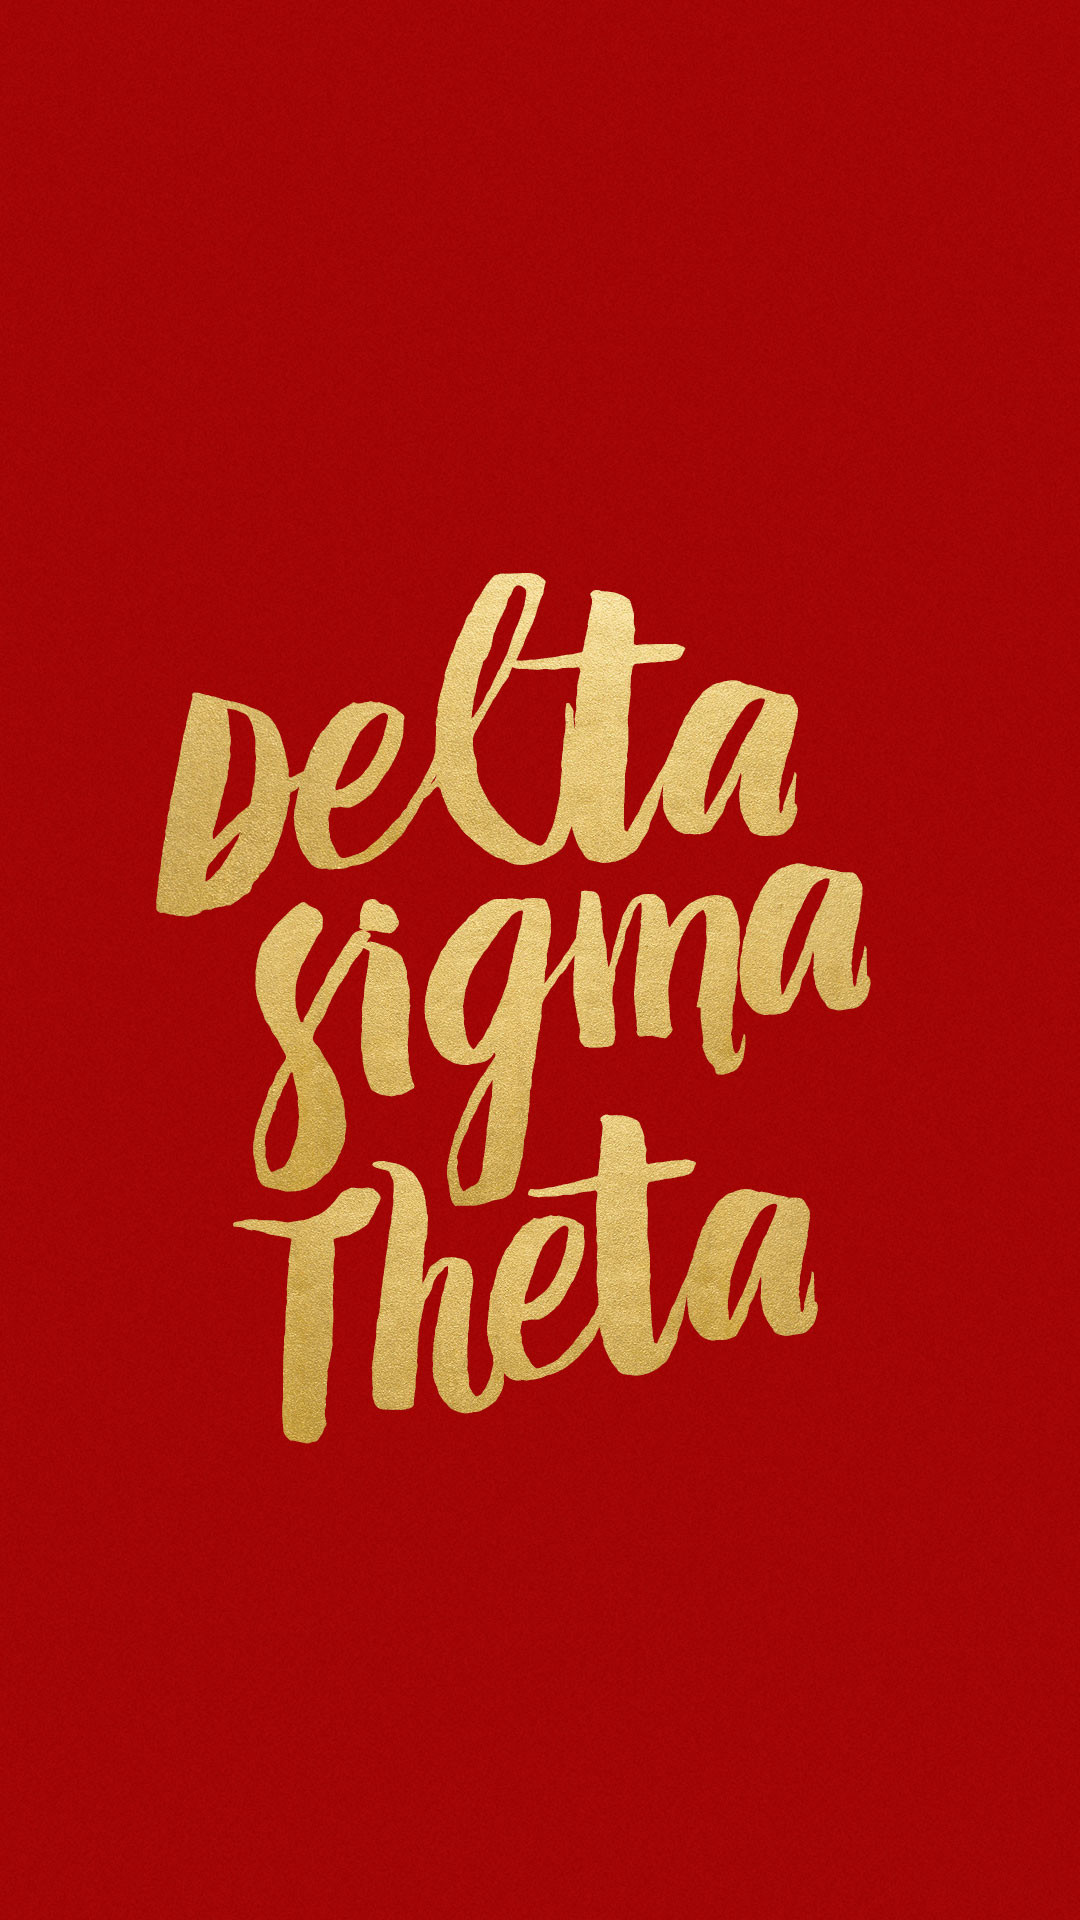 Delta Sigma Theta Wallpaper Image